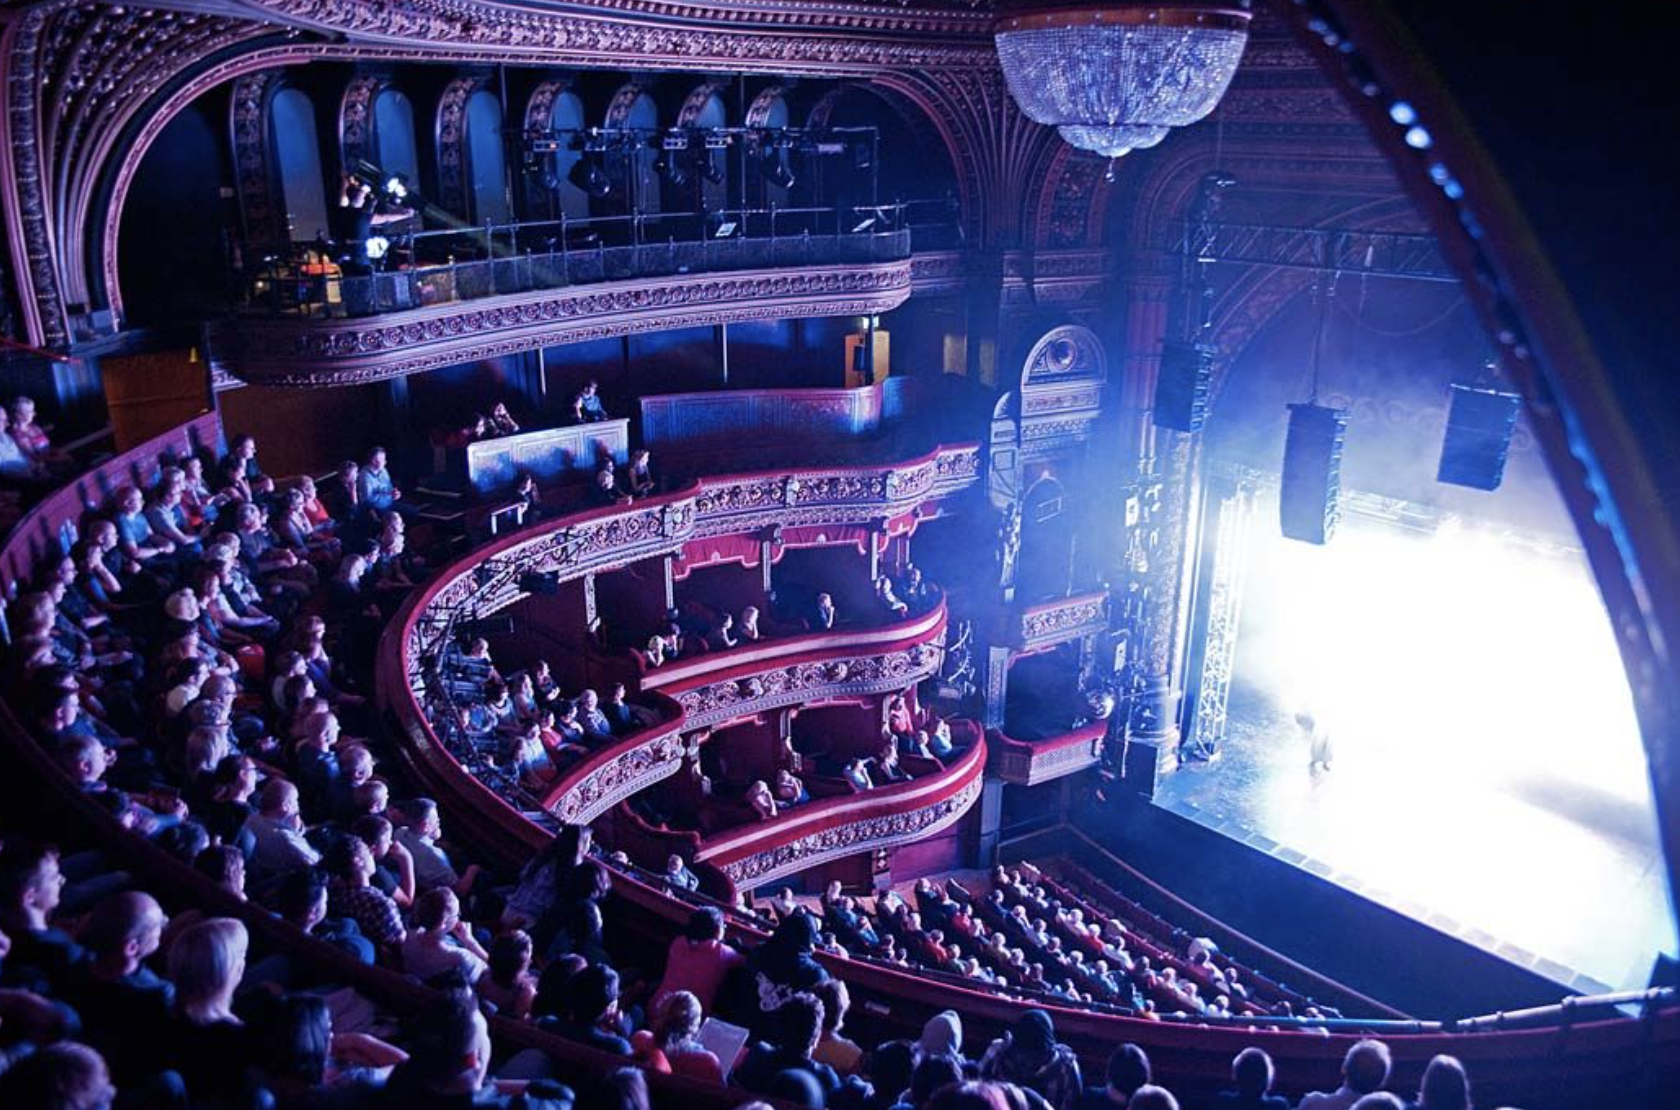 Raising the curtain on Leeds Heritage Theatres